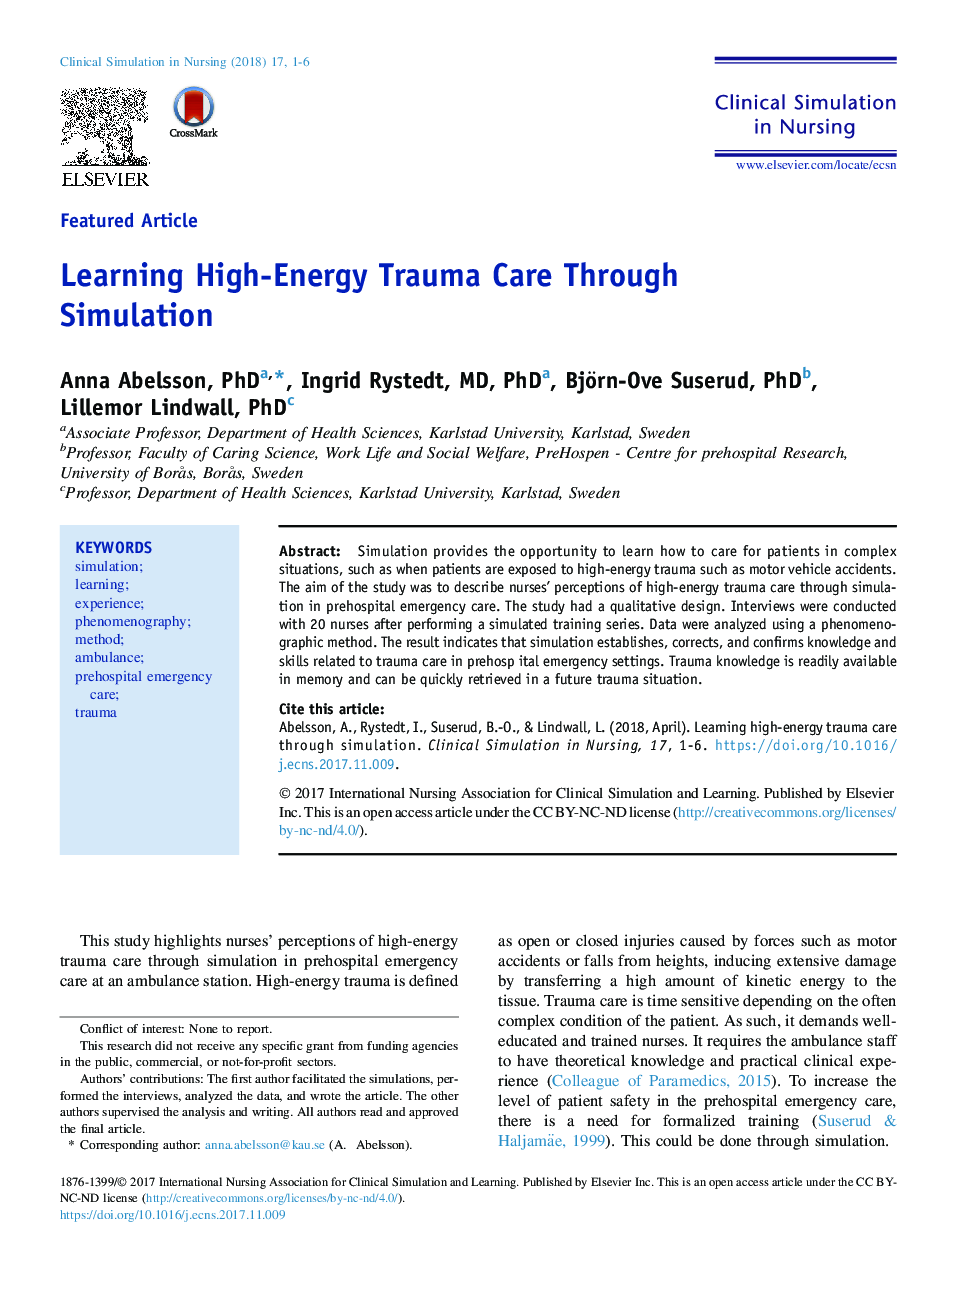 Learning High-Energy Trauma Care Through Simulation